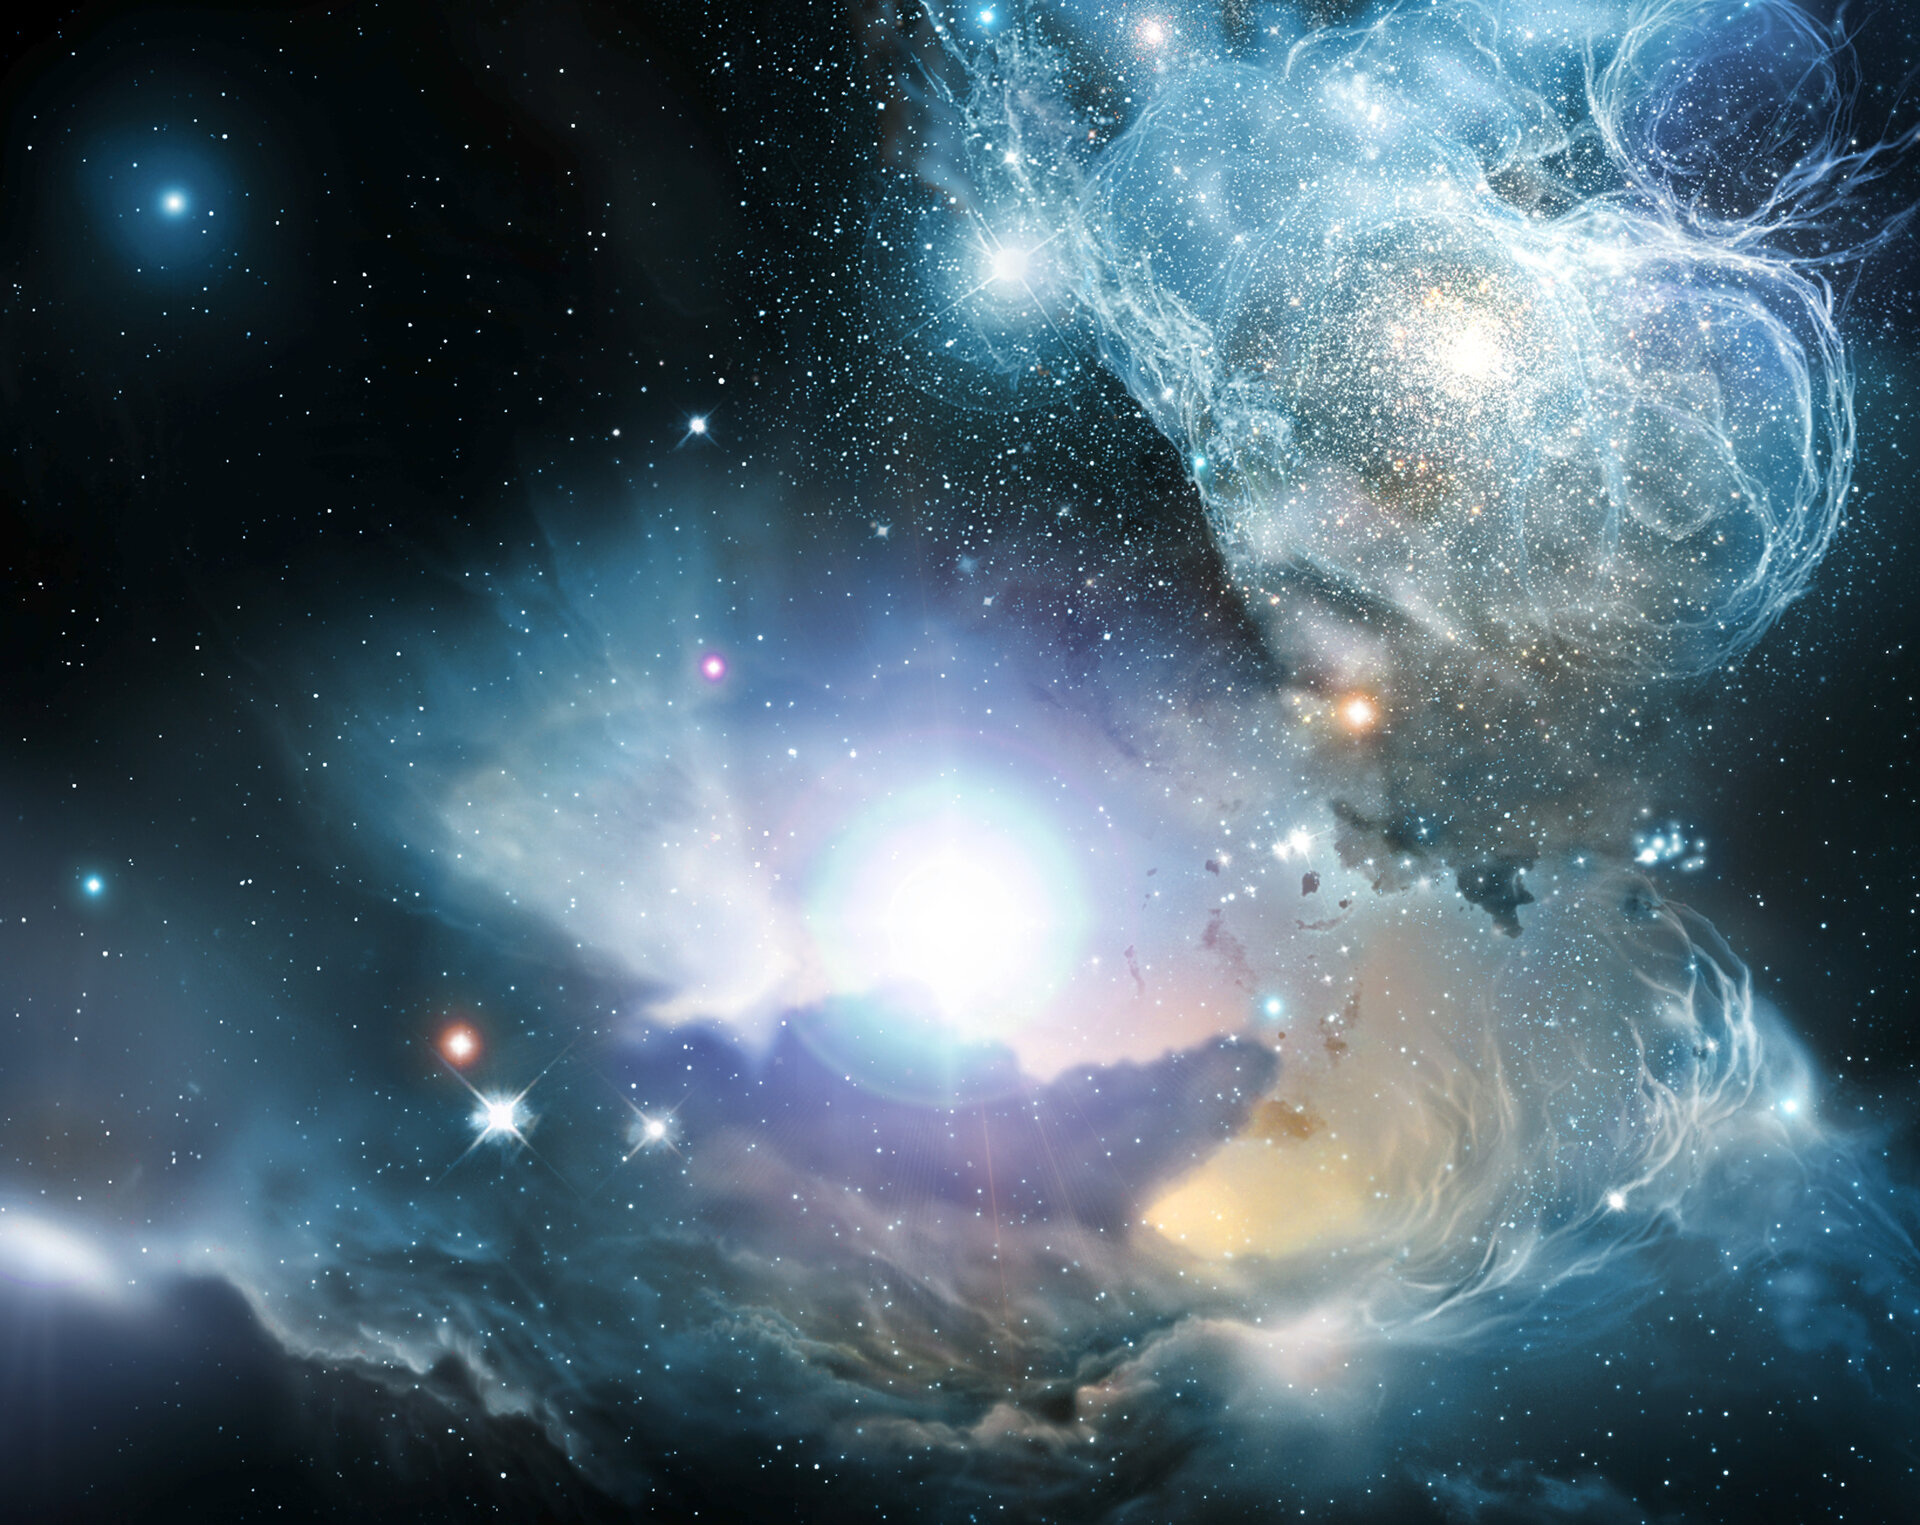 Massive Stars: Engines of Creation